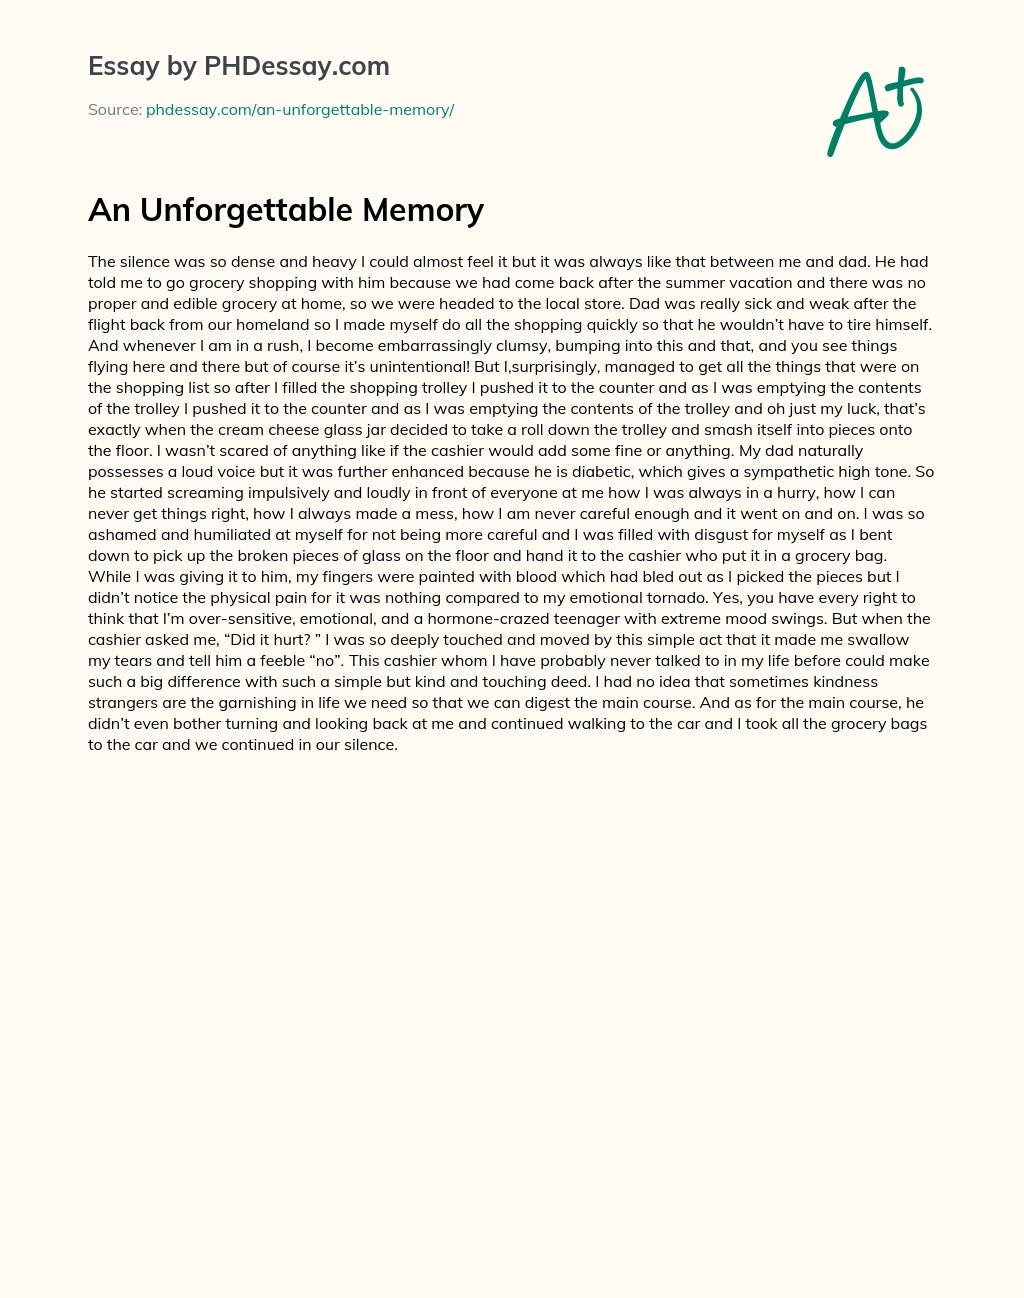 An Unforgettable Memory essay